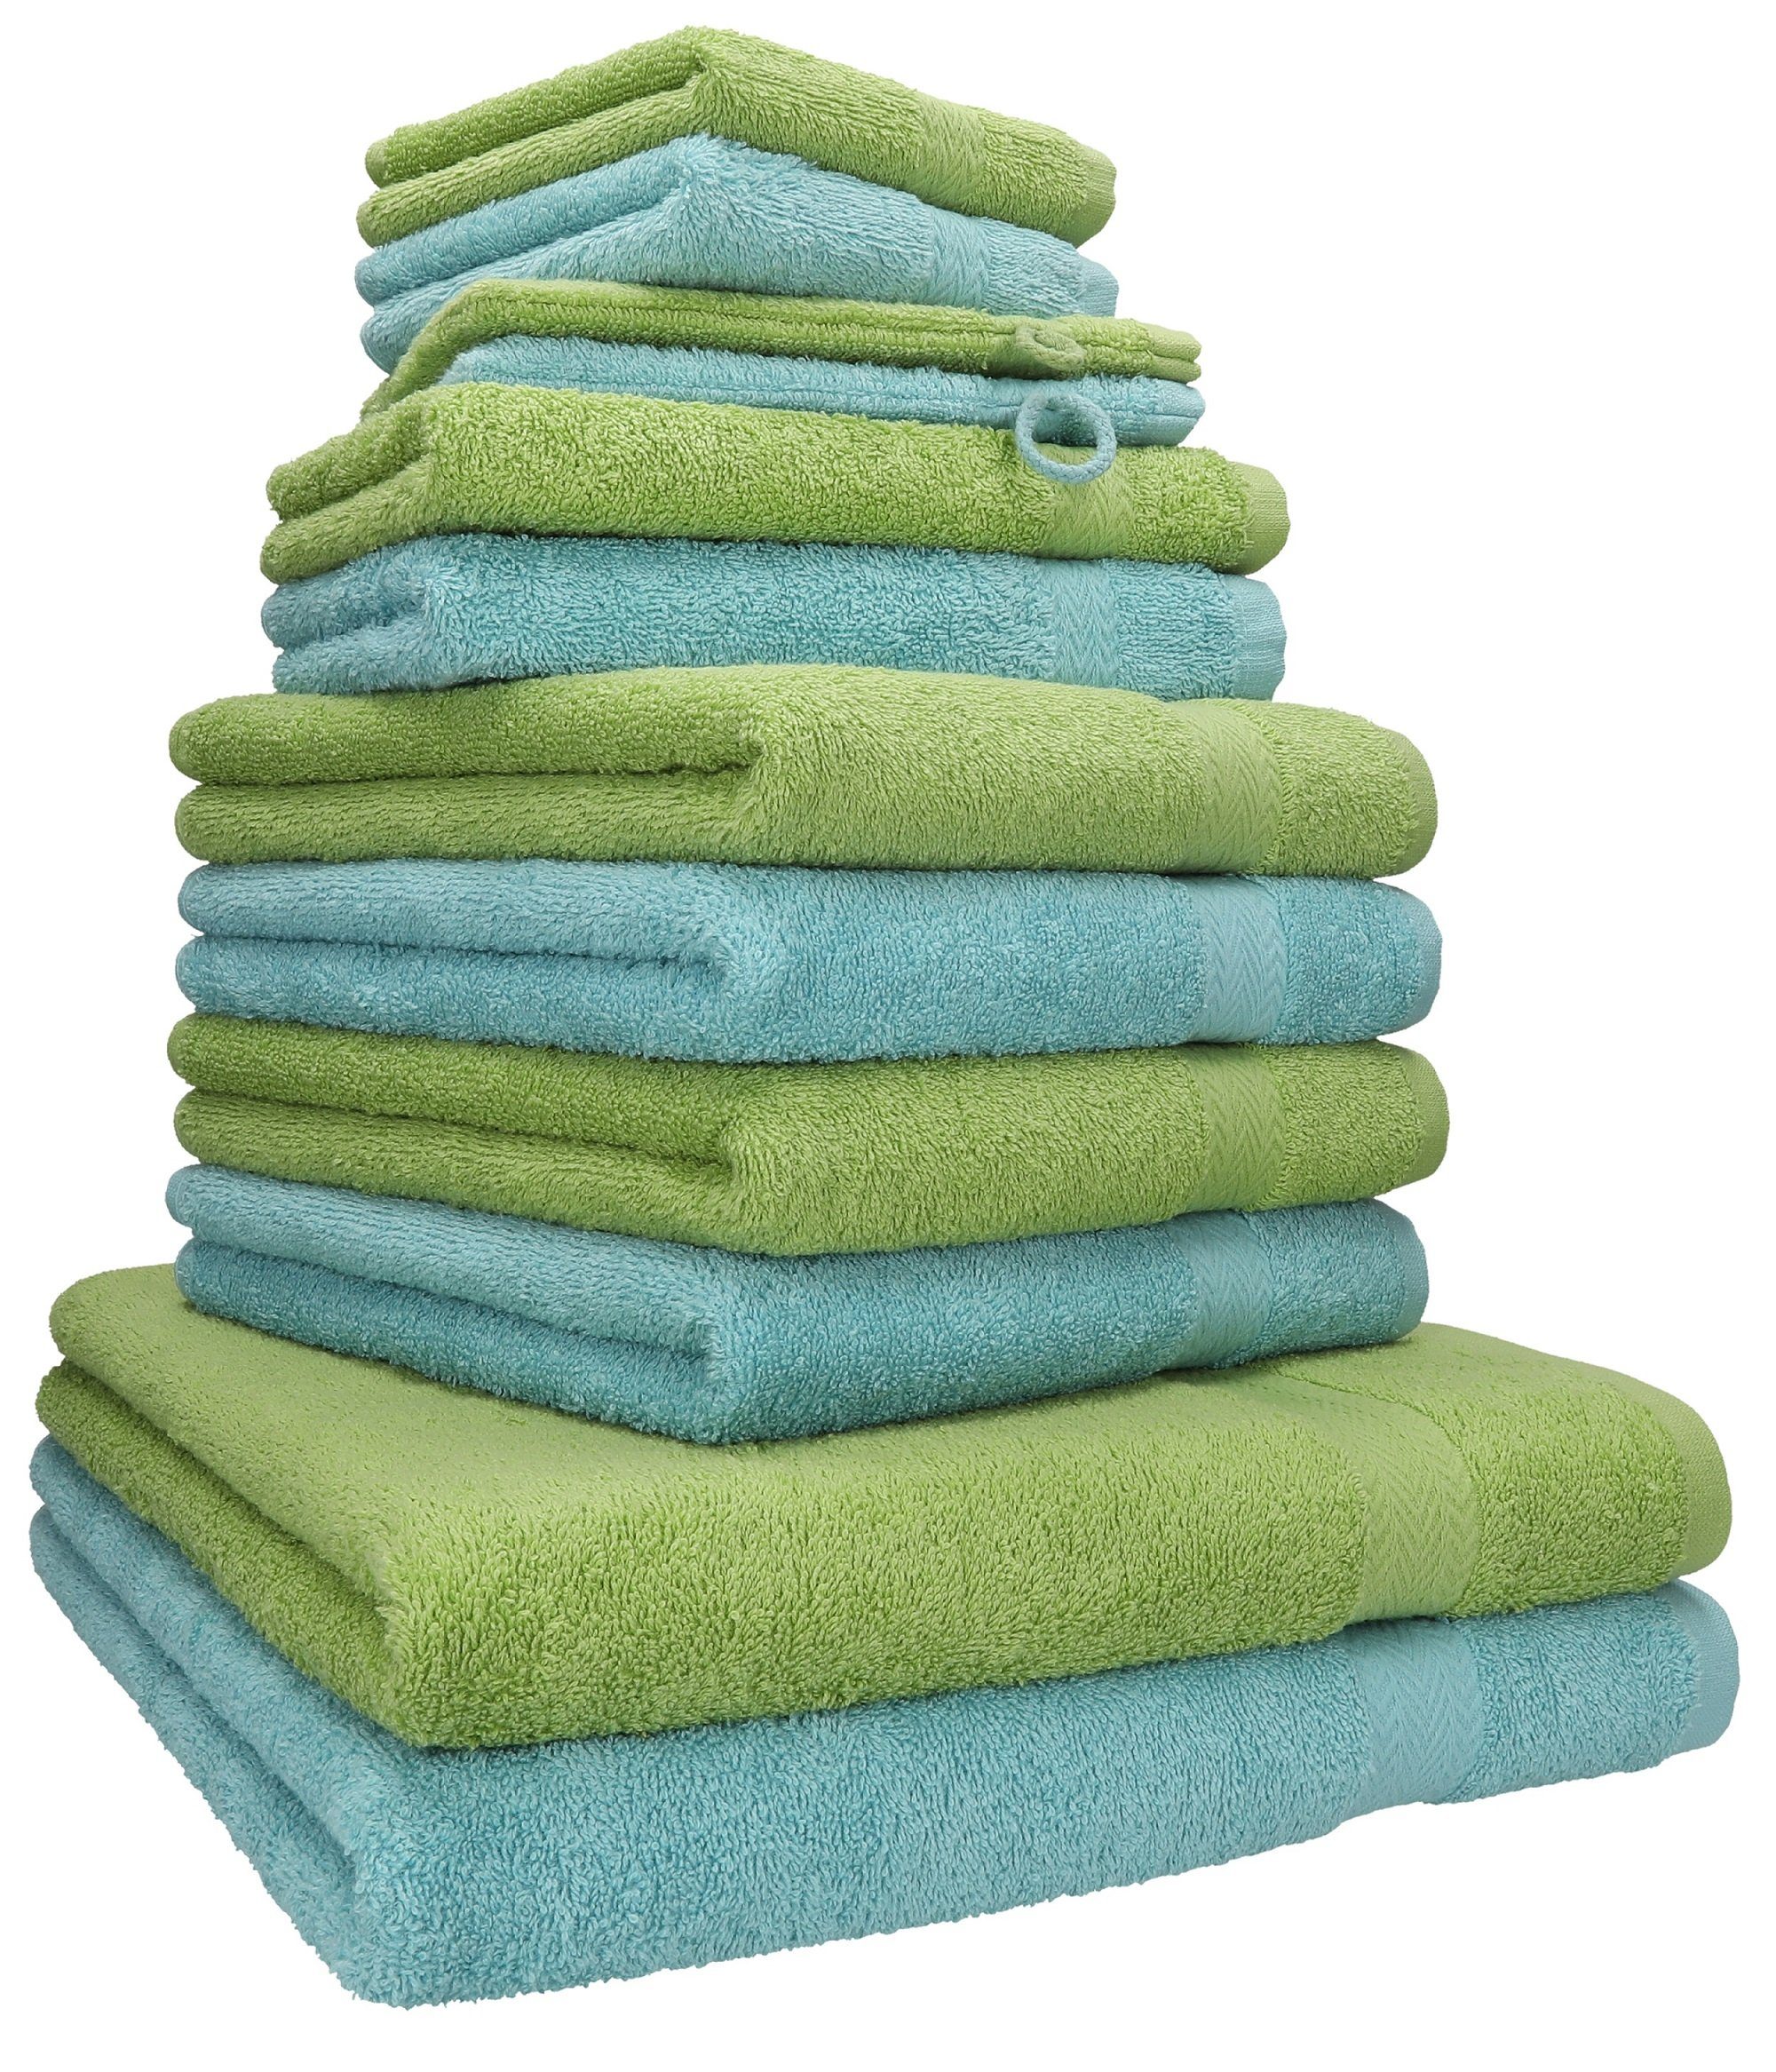 Betz Handtuch Set 12-tlg. Handtuch Set Premium Farbe Ocean/avocadogrün, 100% Baumwolle, (12-tlg)